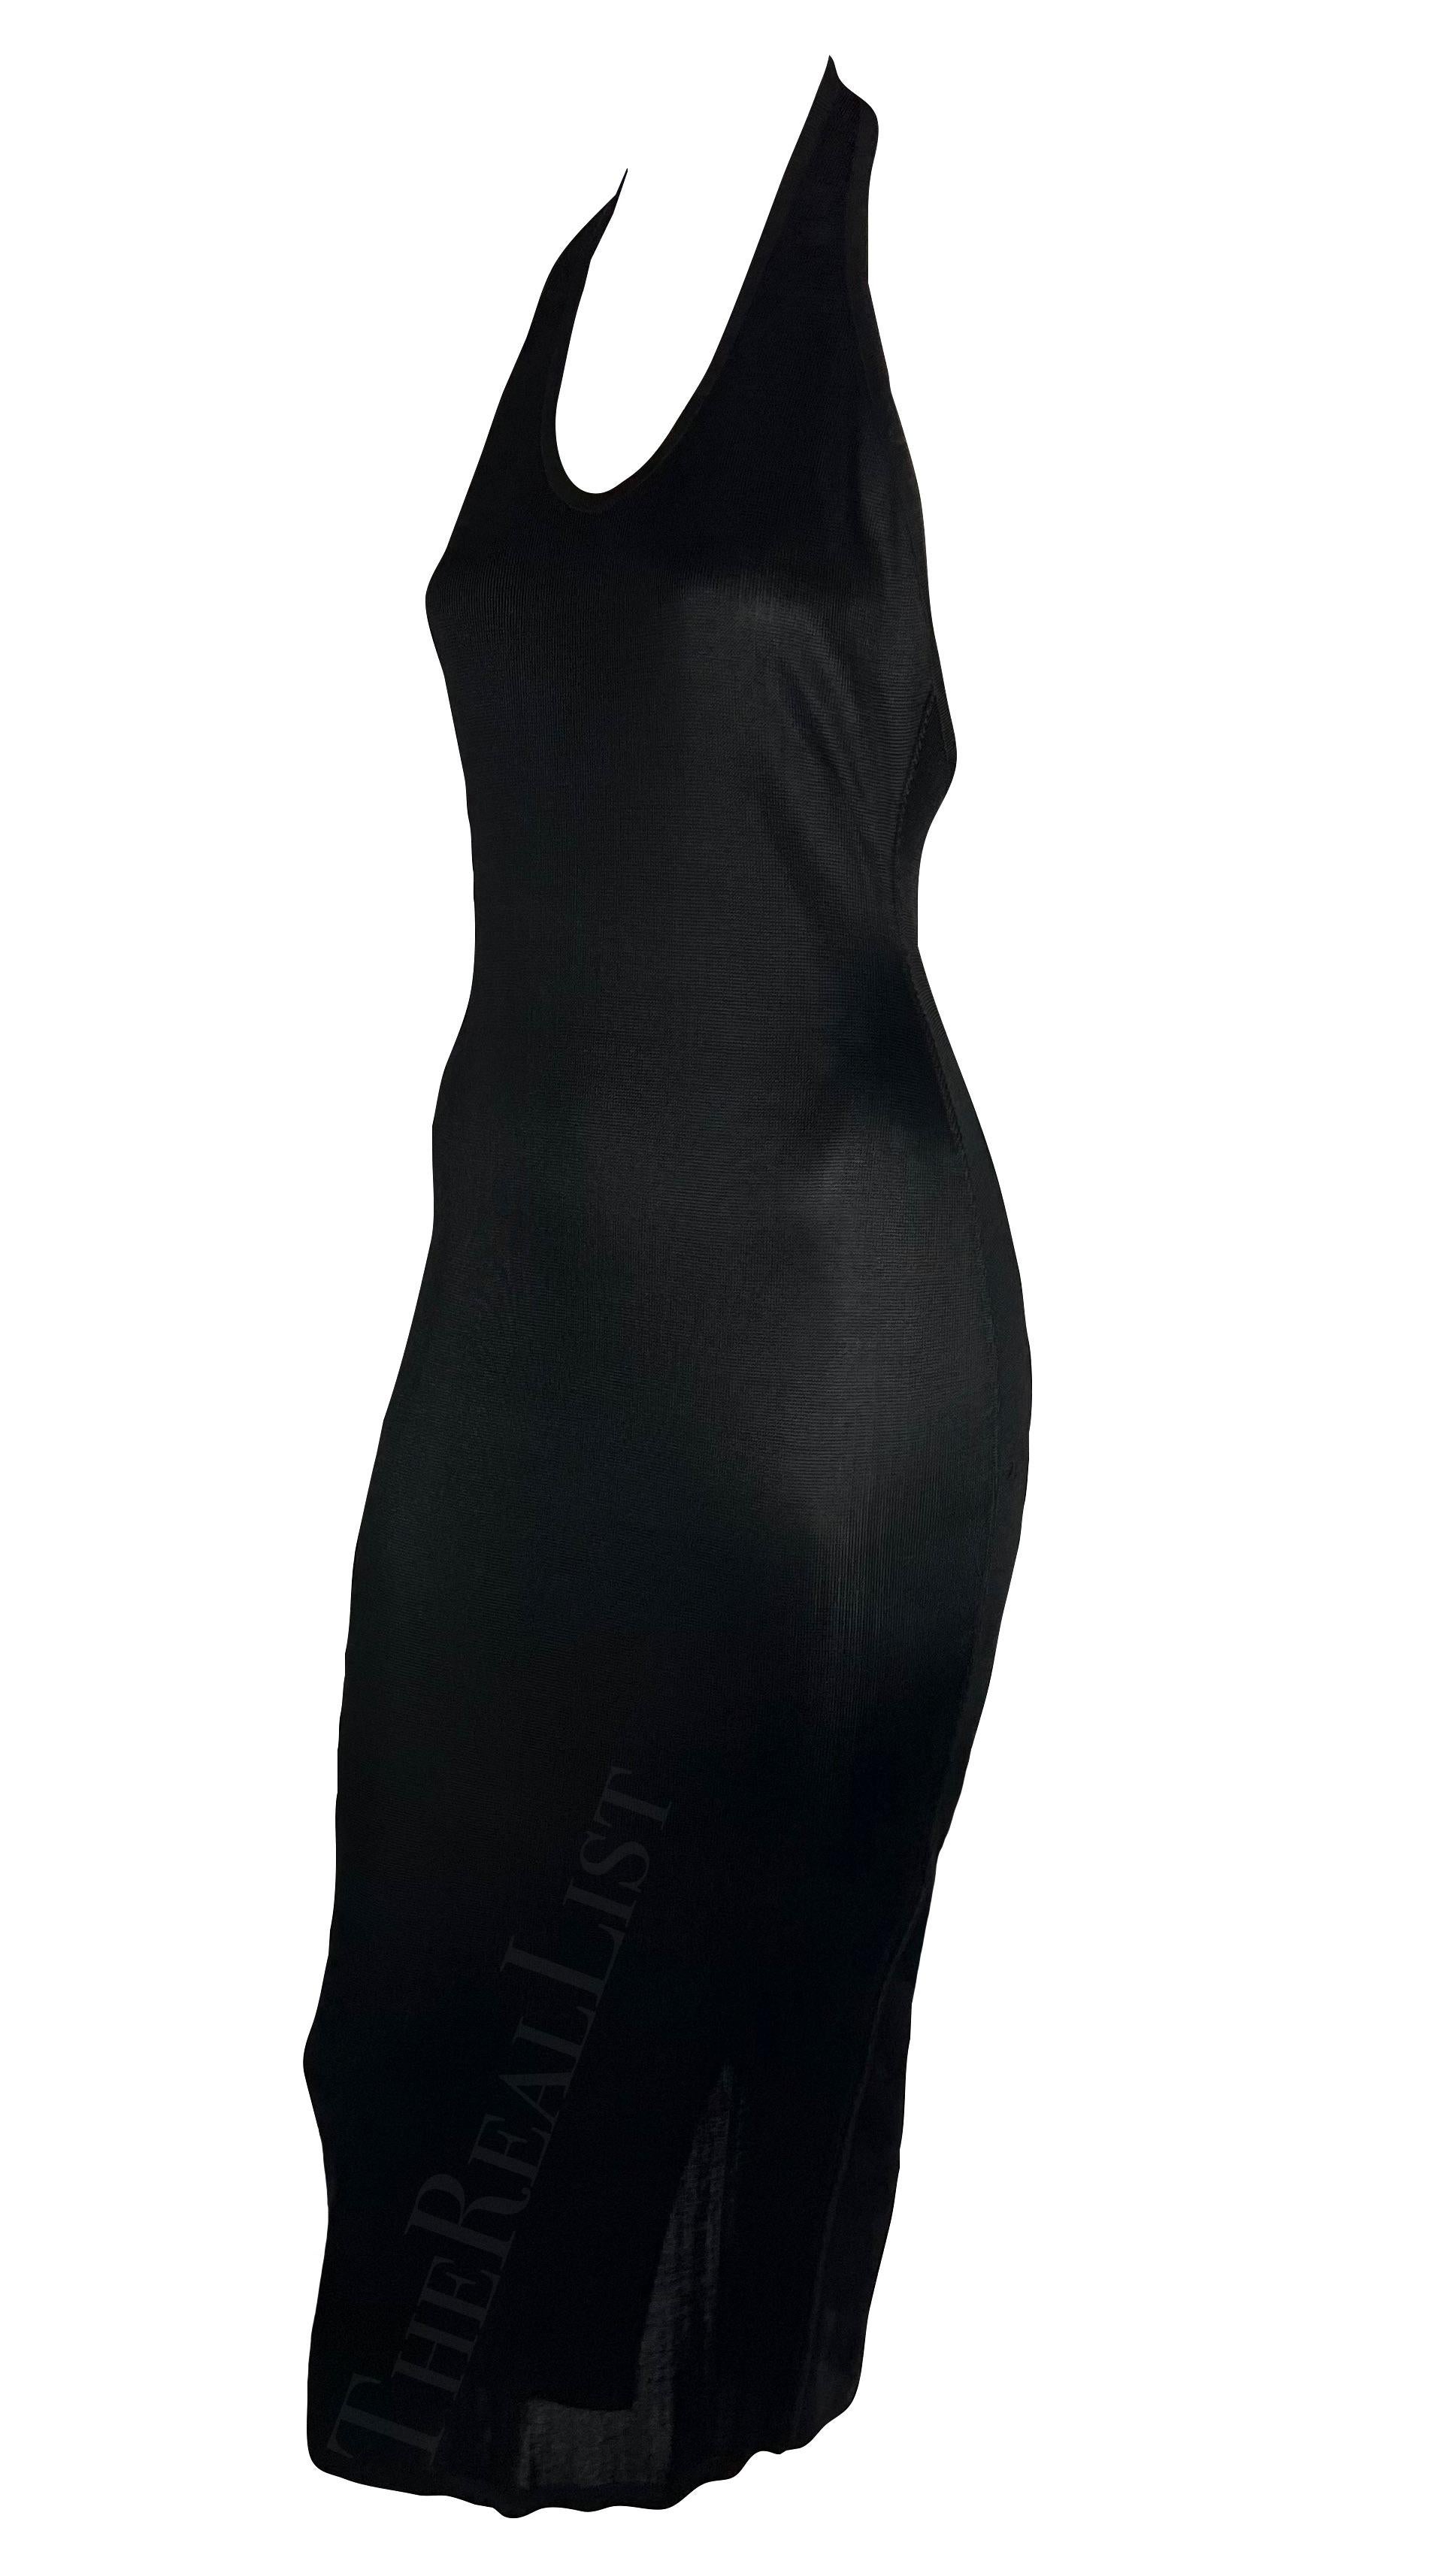 S/S 1986 Azzedine Alaïa Black Knit Halter Neck Bodycon Backless Dress For Sale 1